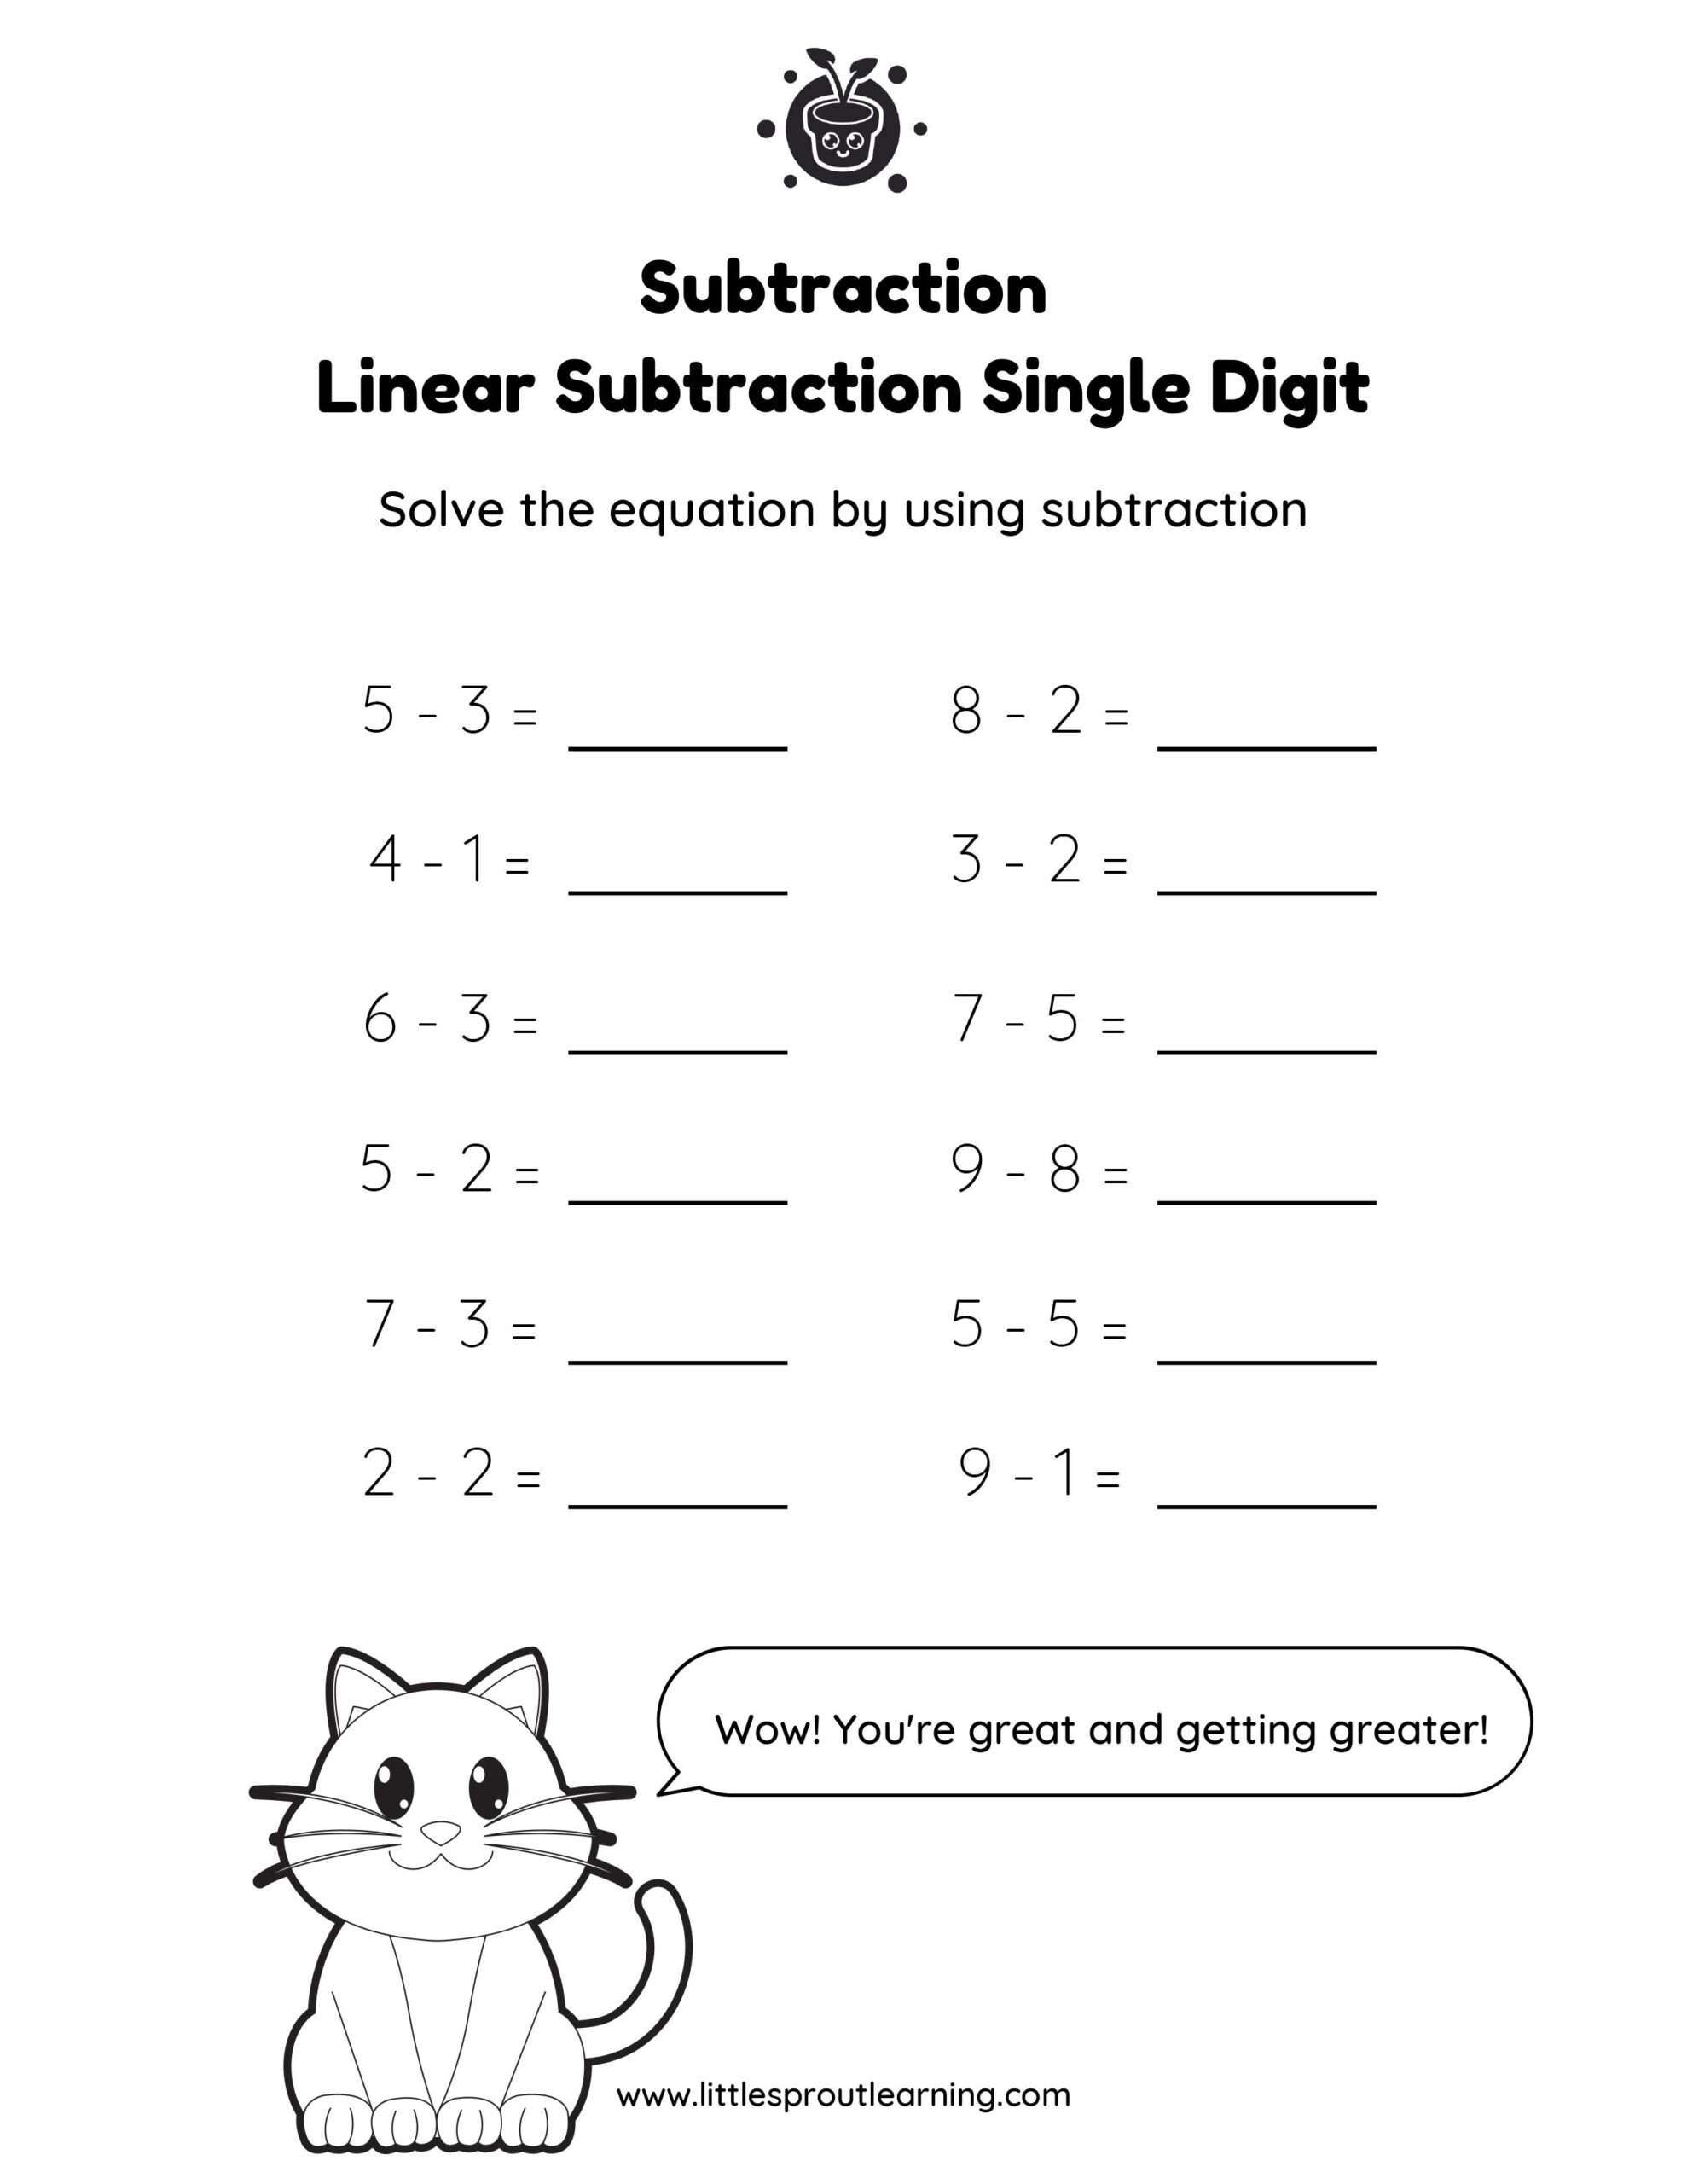 Single Digit Linear Subtraction Worksheet – B